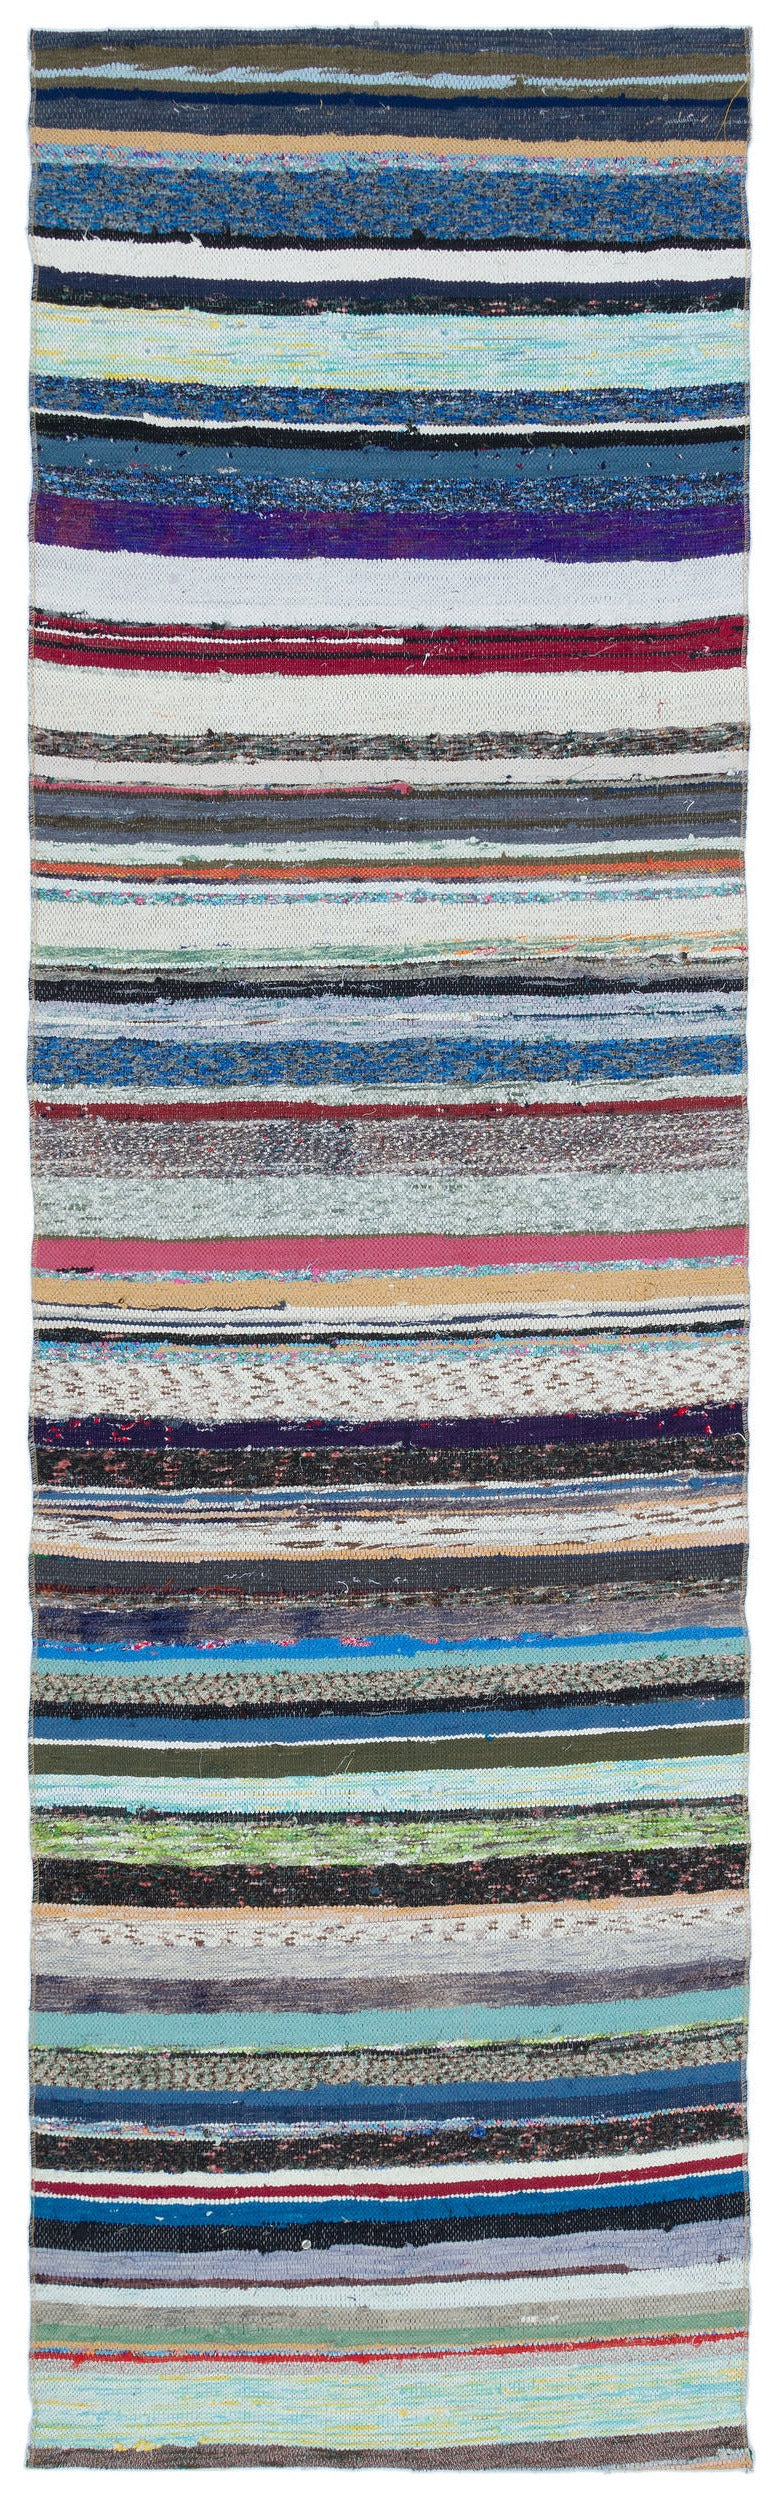 Cretan Beige Striped Wool Hand-Woven Carpet 085 x 288